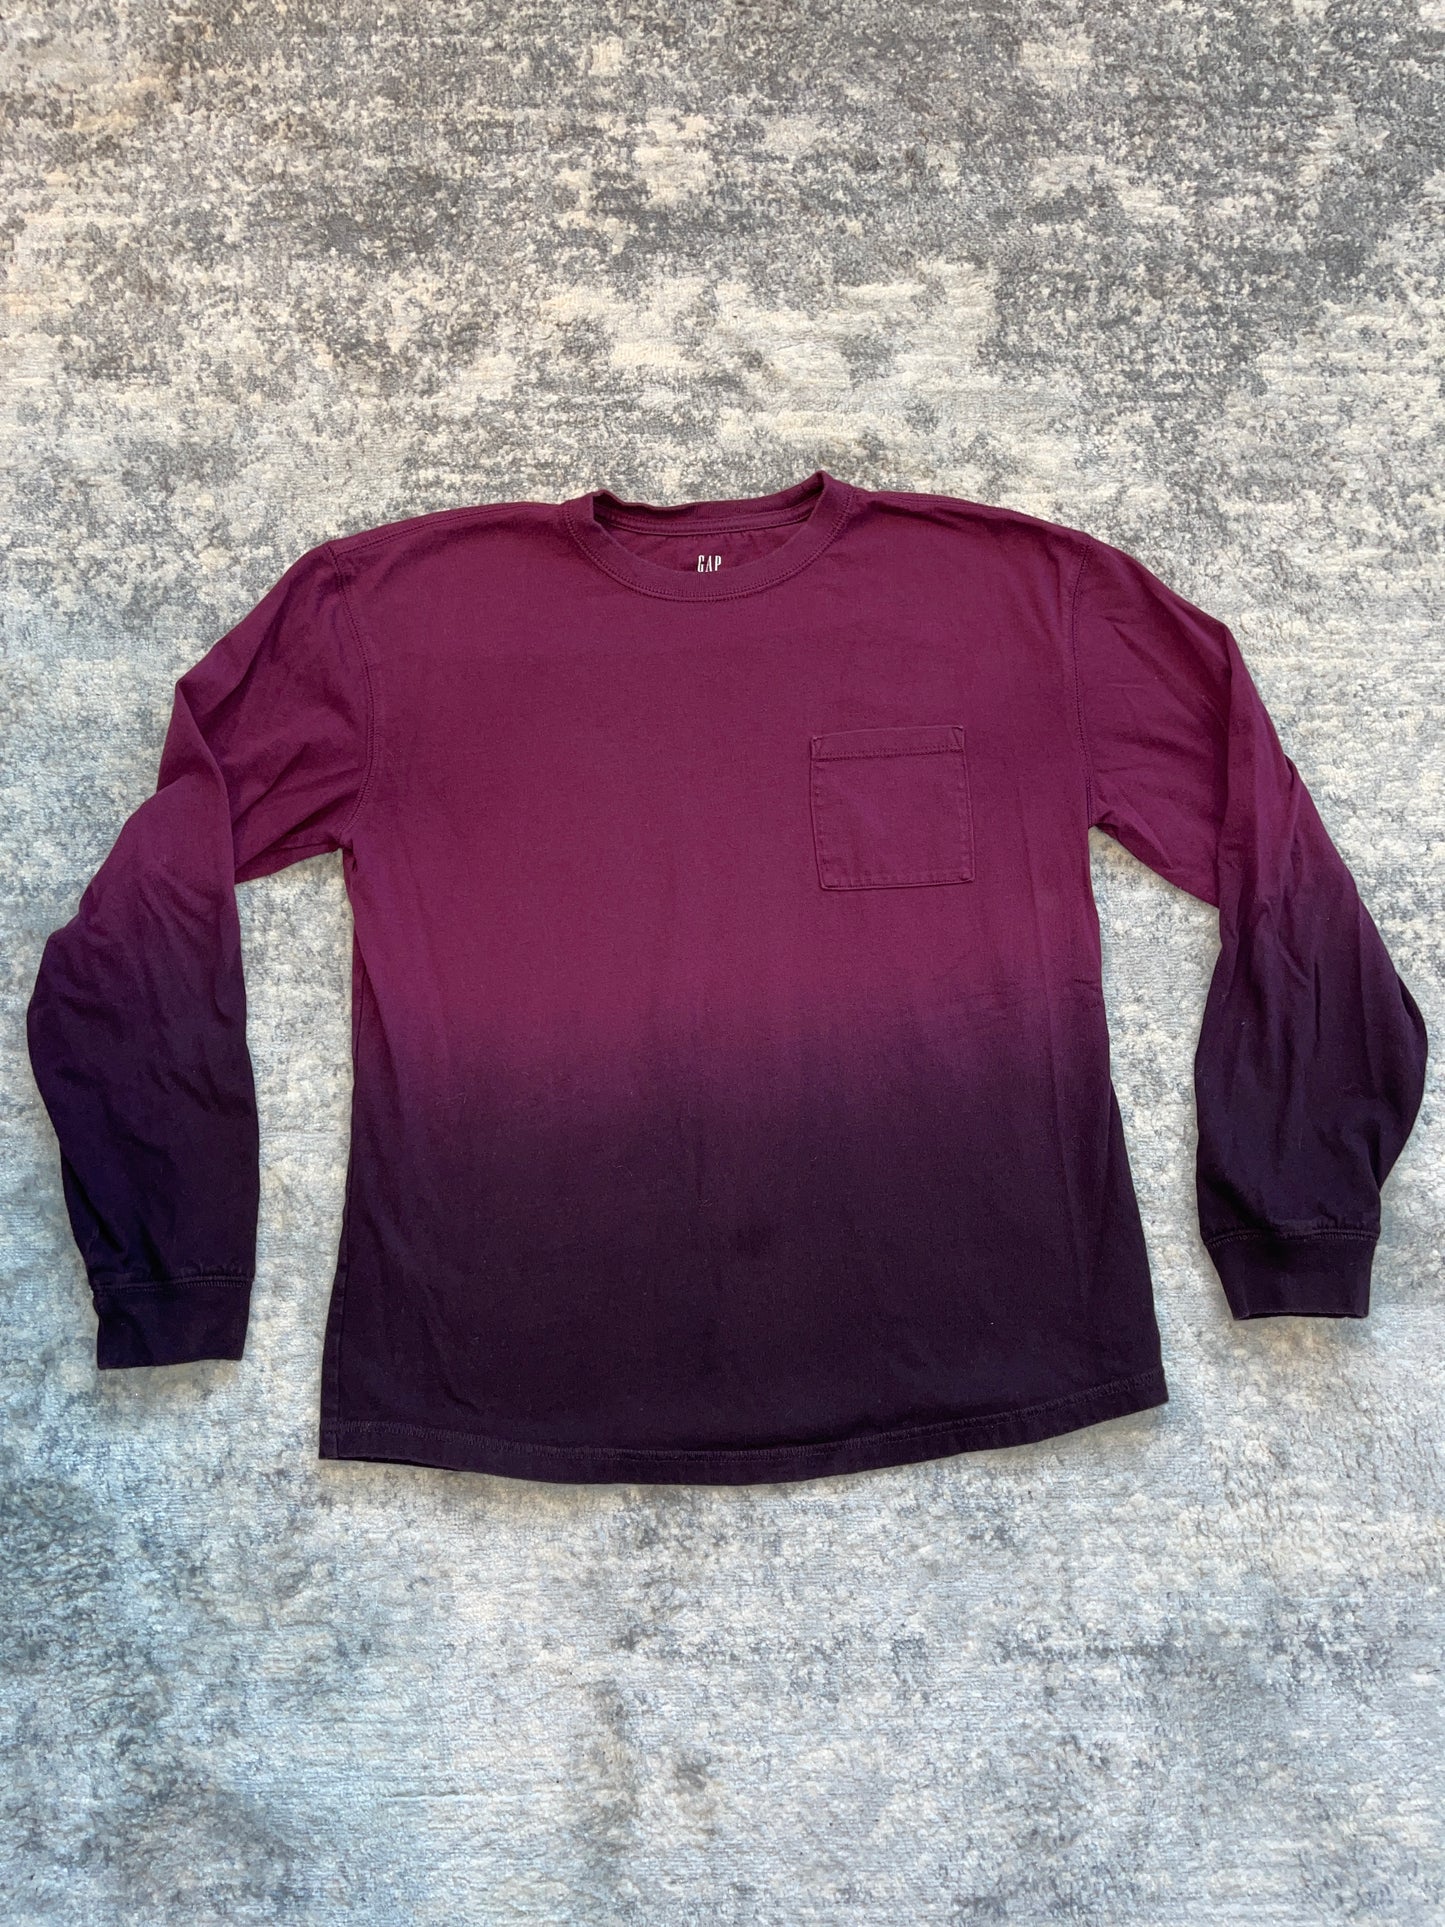 GAP Purple Fade Pocket Long-Sleeved TShirt size 14-16- PPU Montgomery